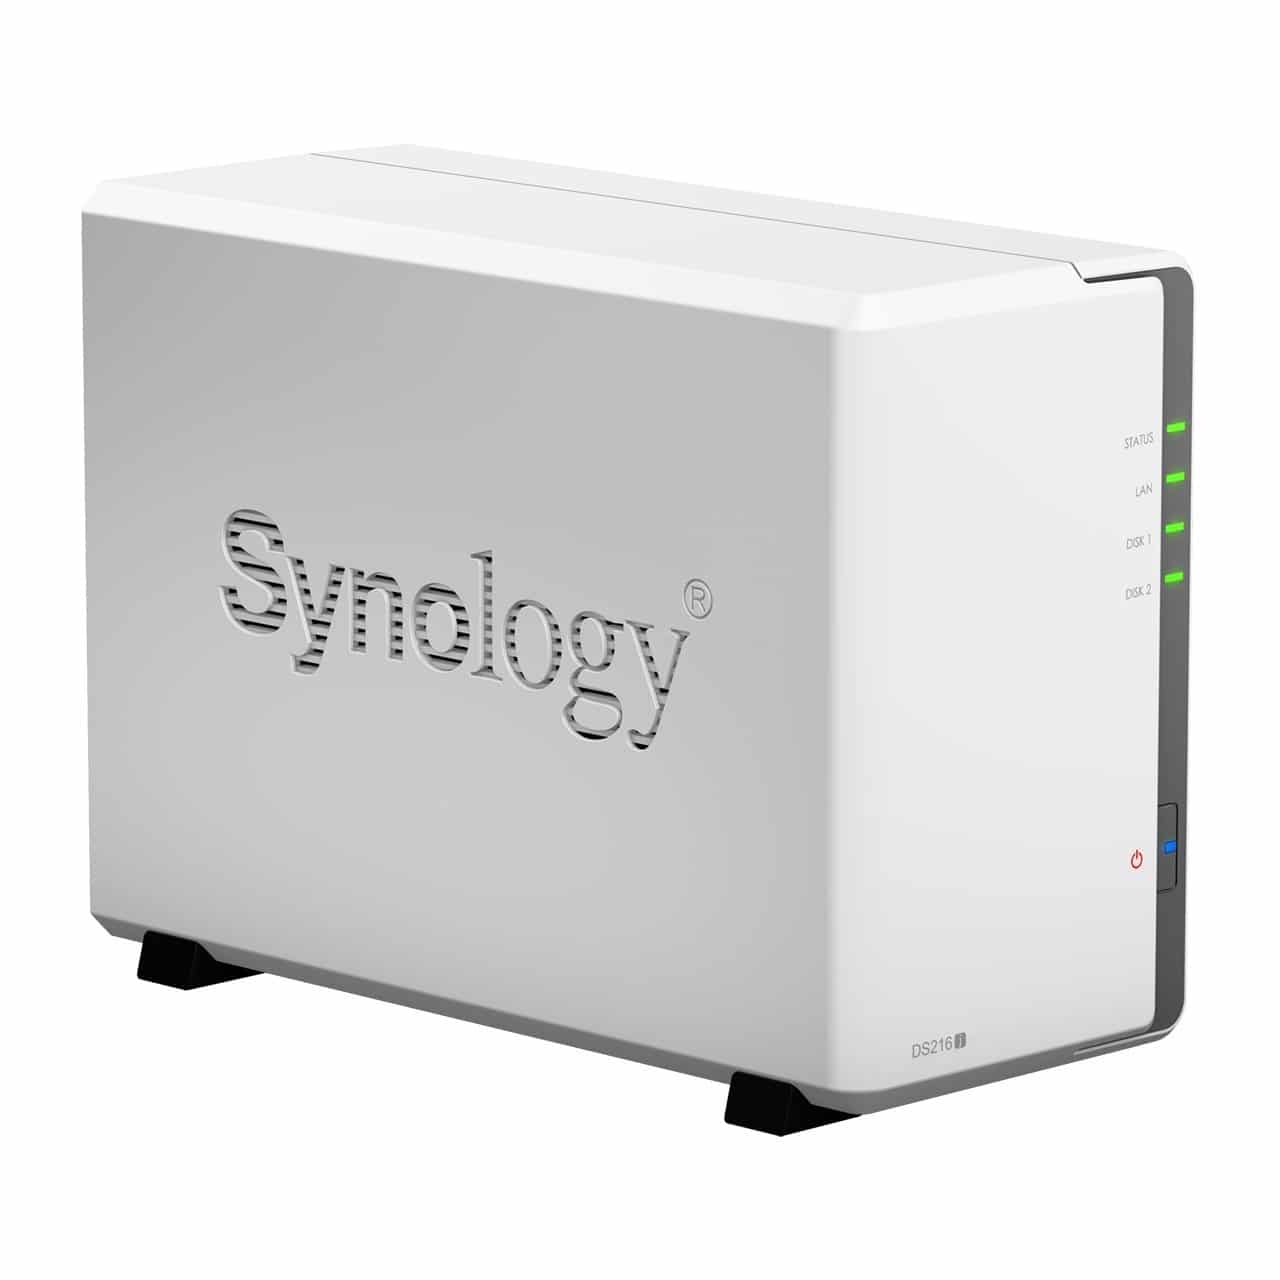 NAS Synology 2 baies - Achat Serveur NAS au meilleur prix